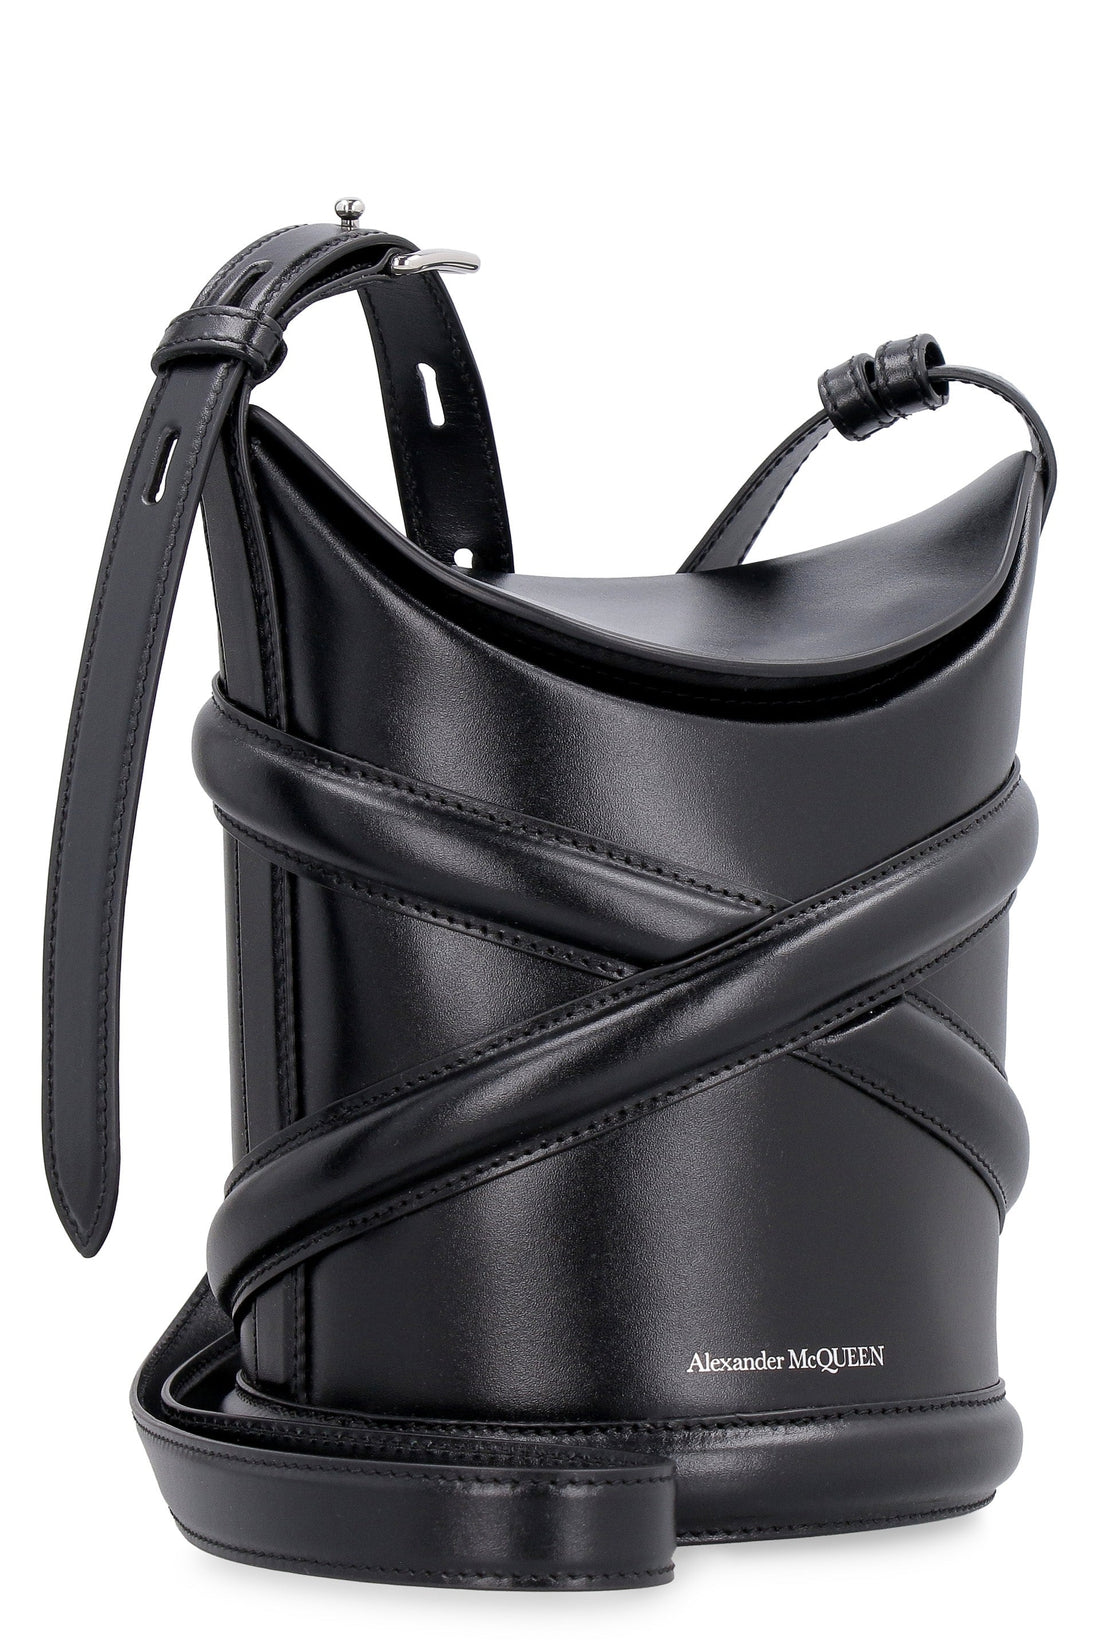 Alexander McQueen-OUTLET-SALE-The Curve leather bucket bag-ARCHIVIST